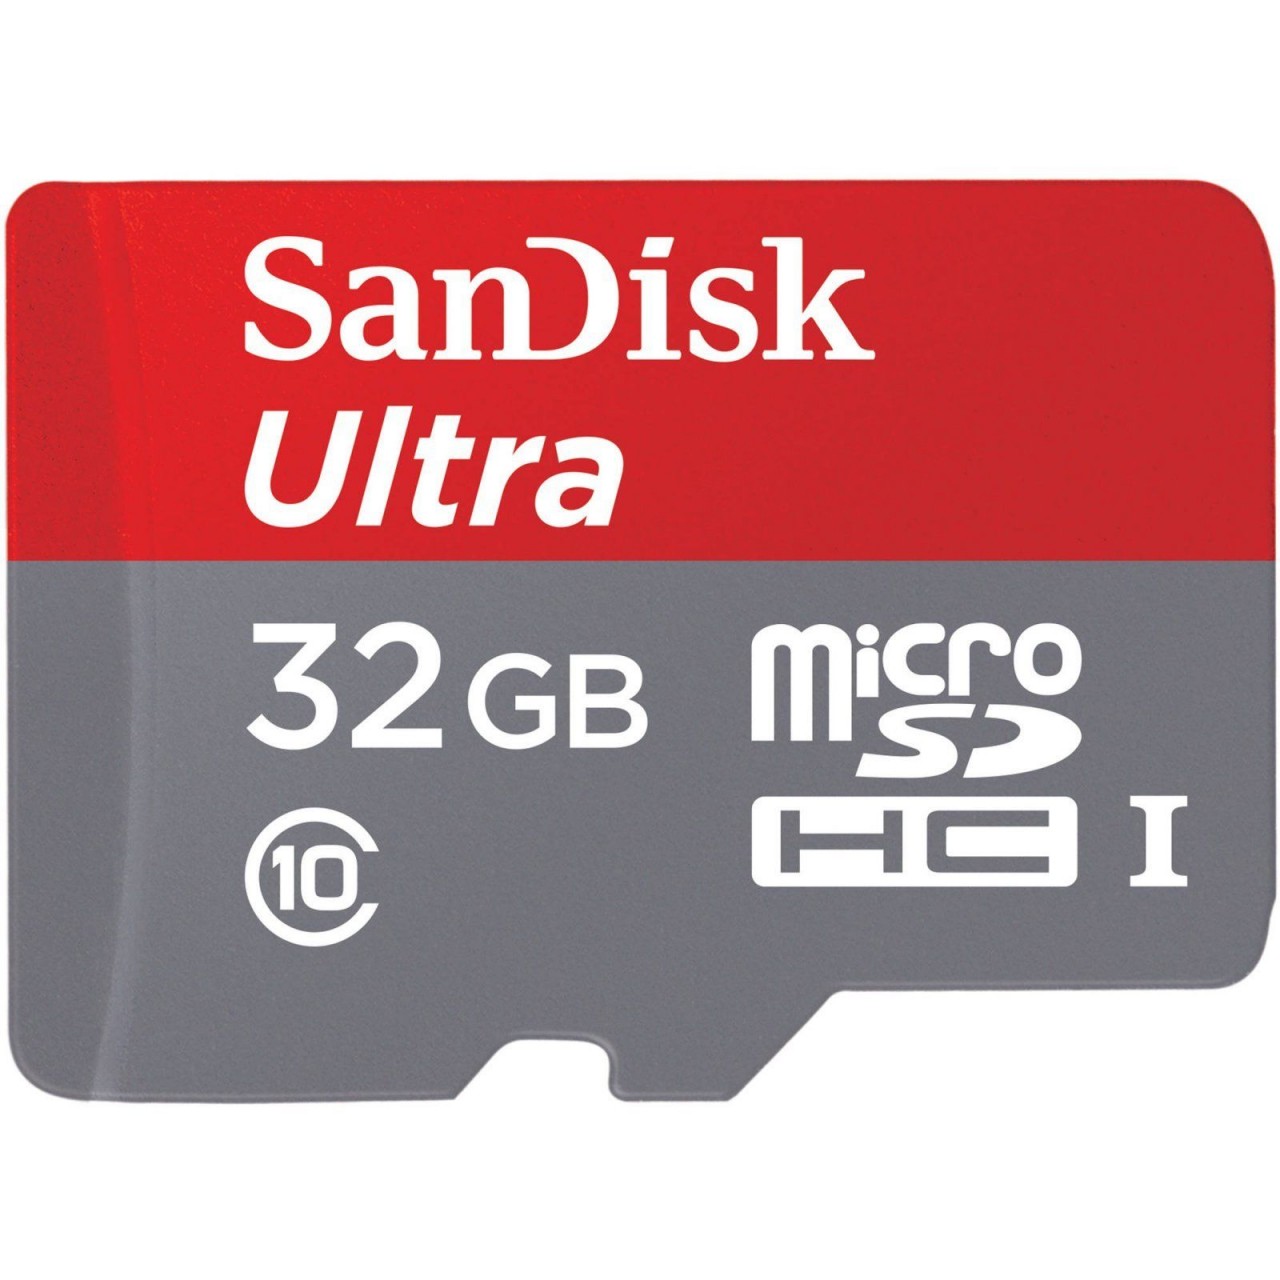 Sandisk Ultra MicroSDHC 32 GB